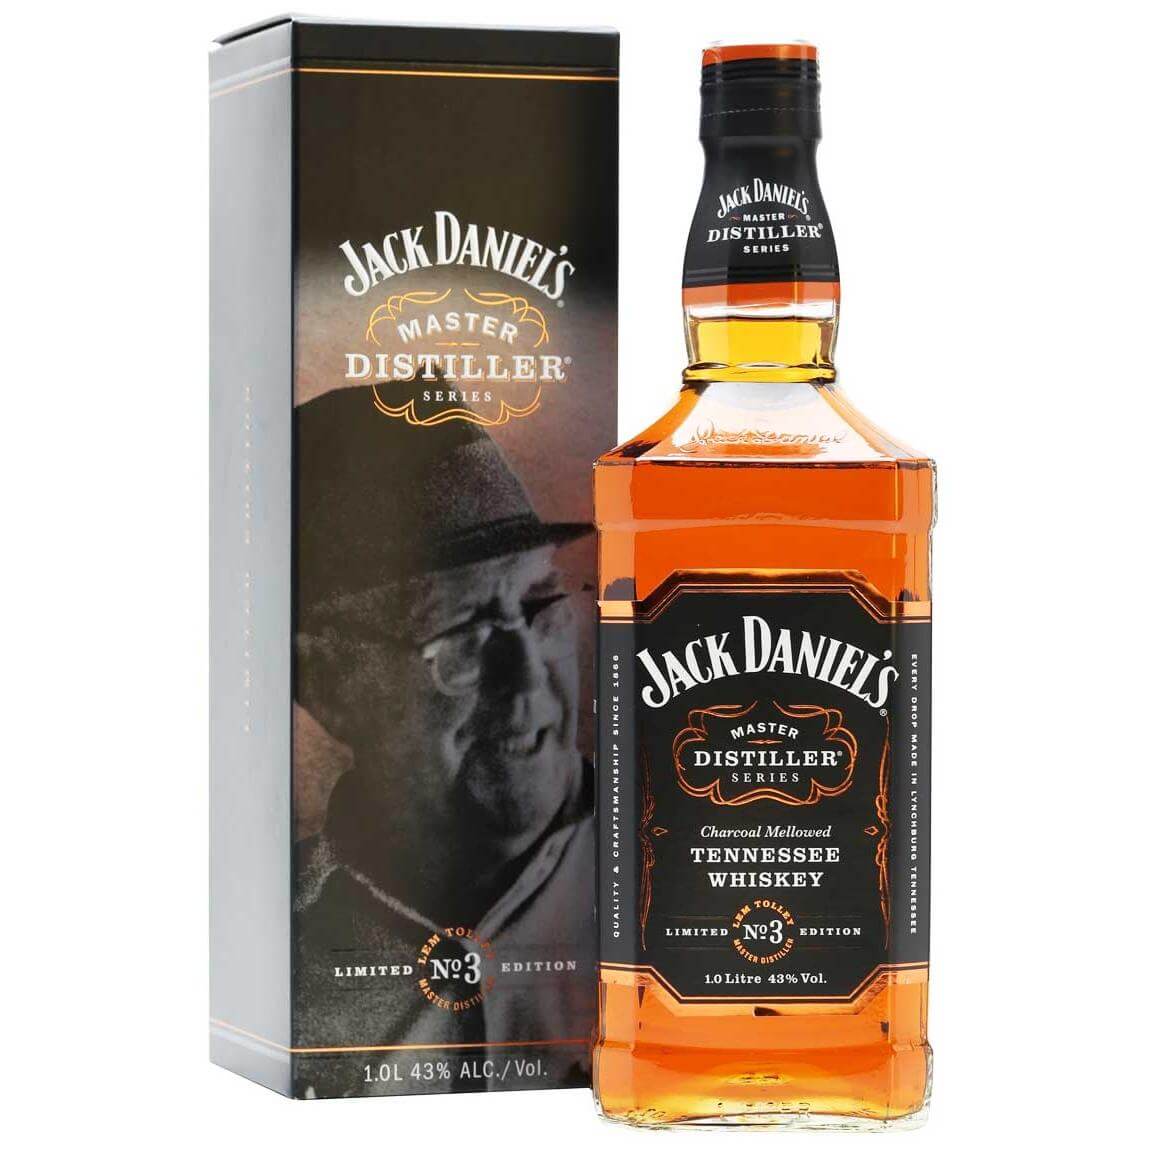 Jack Daniel's Master Distiller Series Limited Edition No. 3 1L